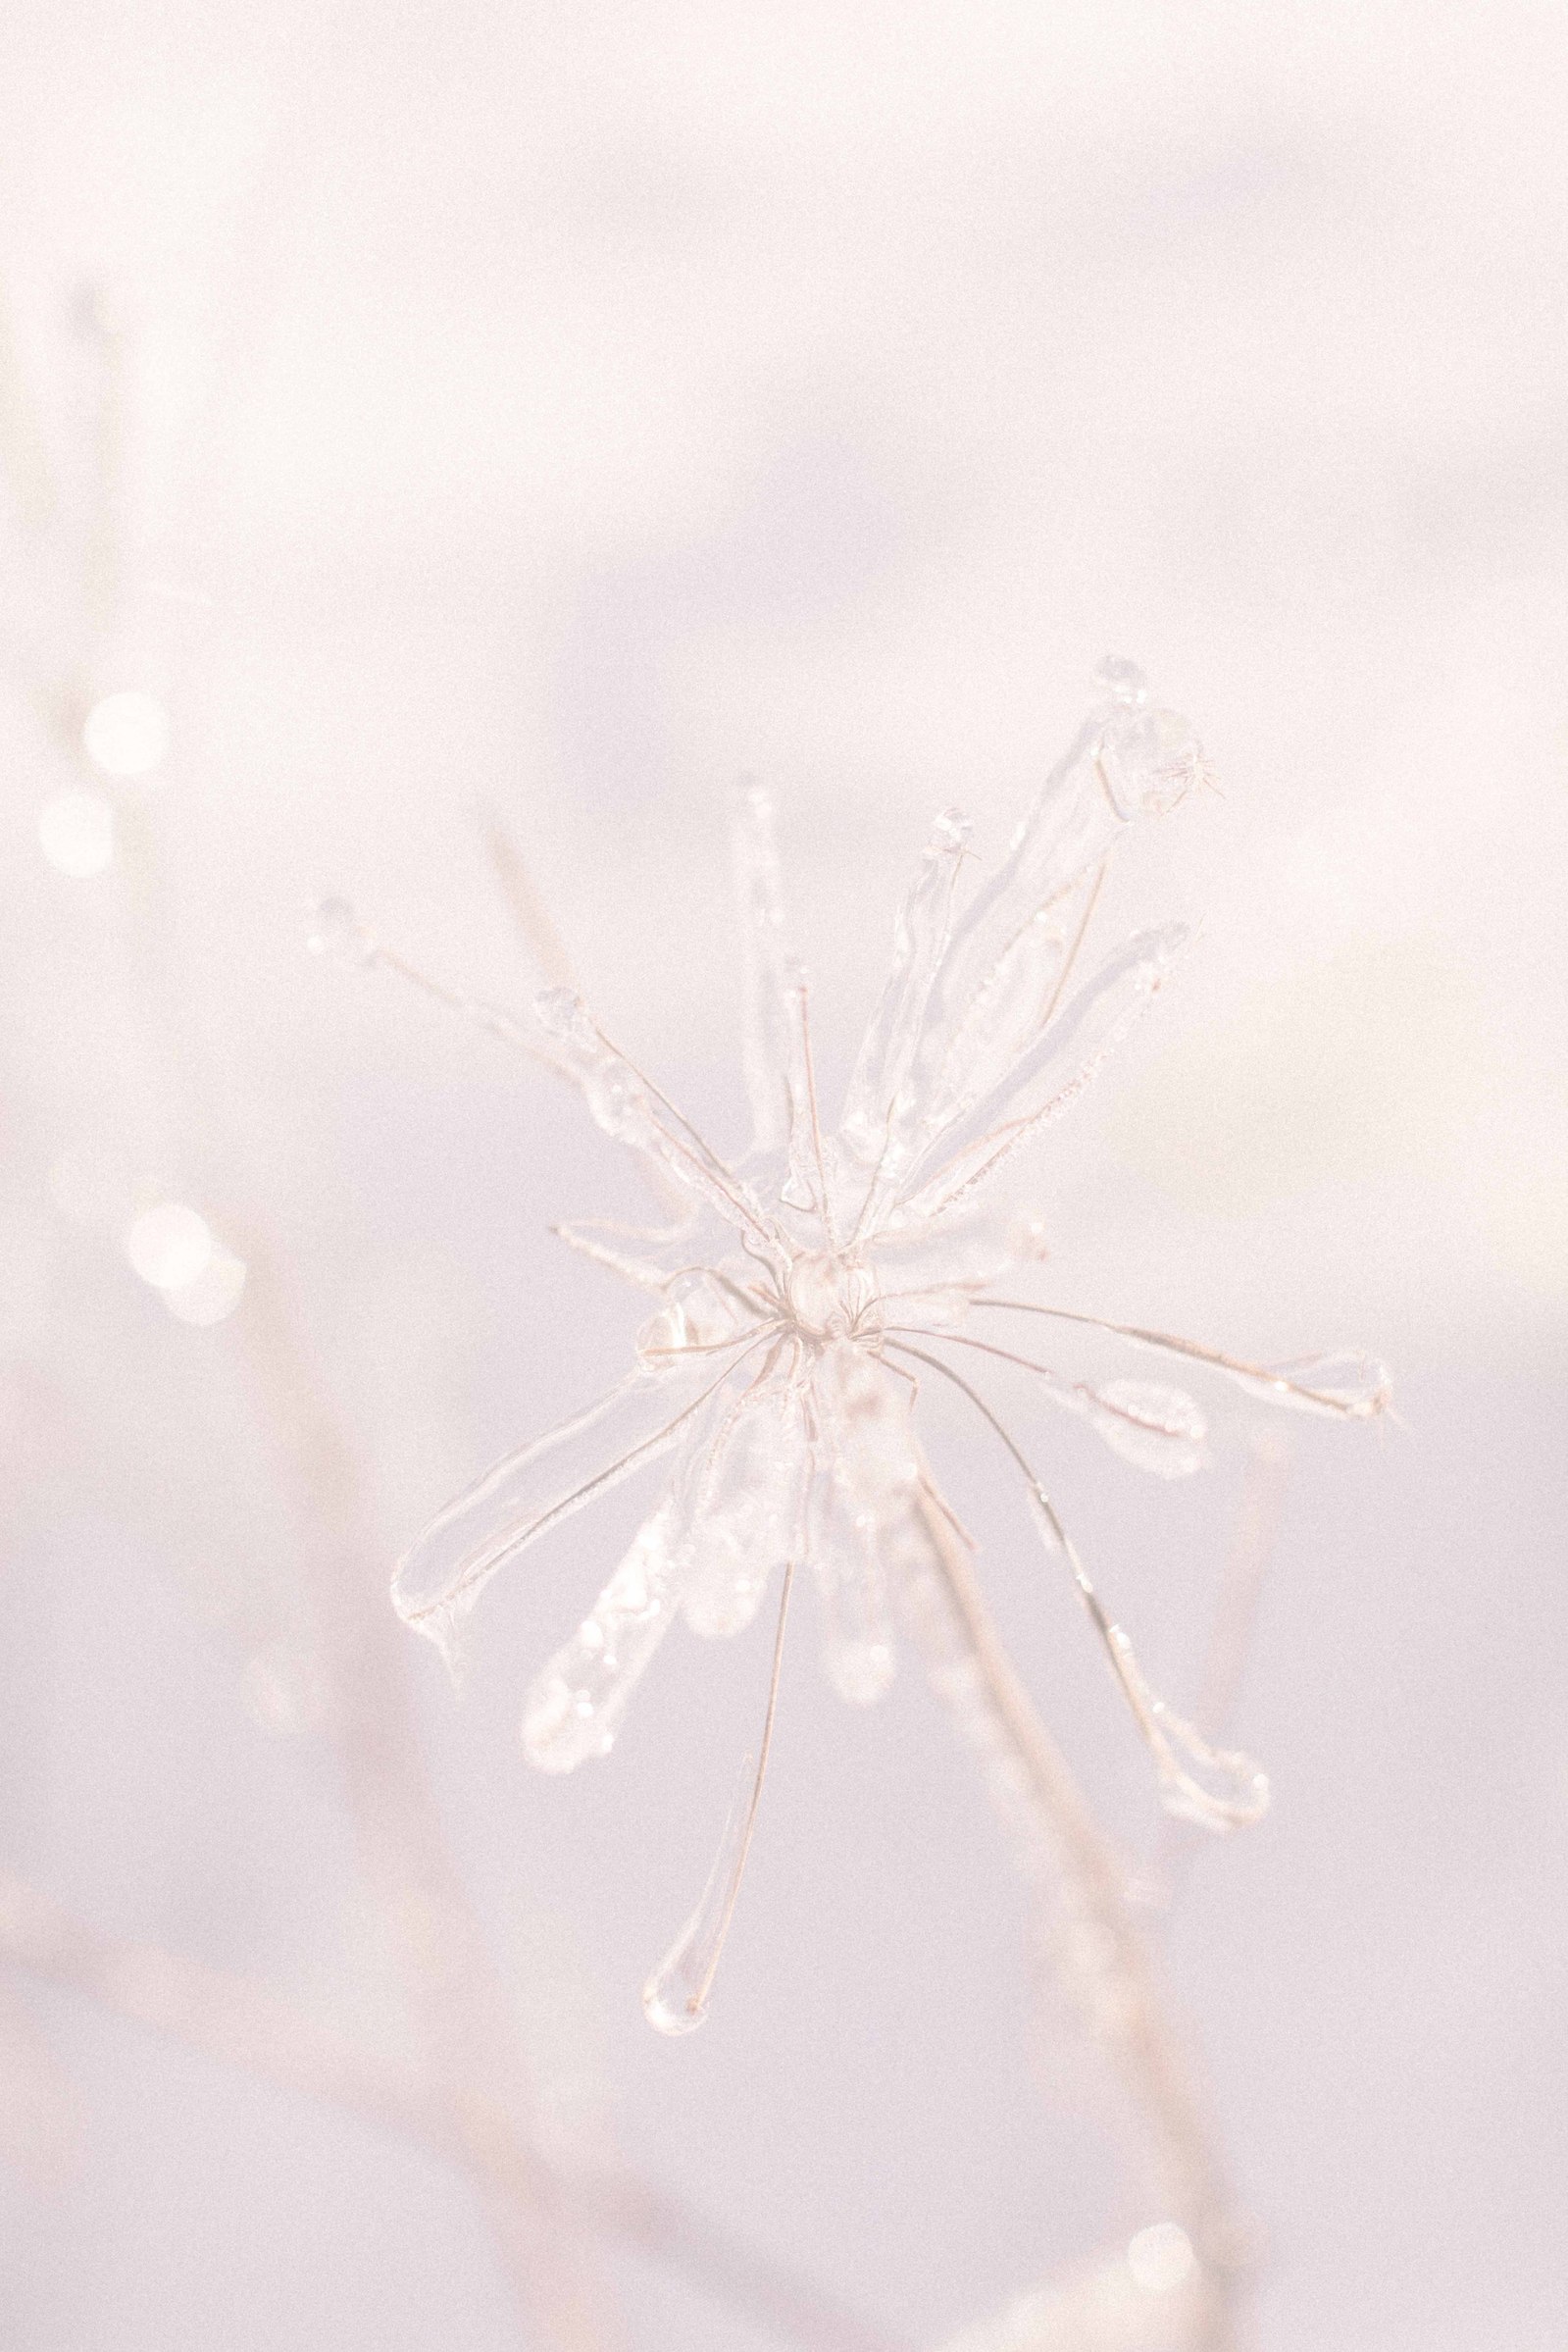 Detailed close up photo of ice around plants. Emily VanderBeek Photography, nature photographer, Champlain Ontario, Discover Ontario, Niagara Photographer, Champlain Photographer, Vaudreuil-Soulanges Photographer.